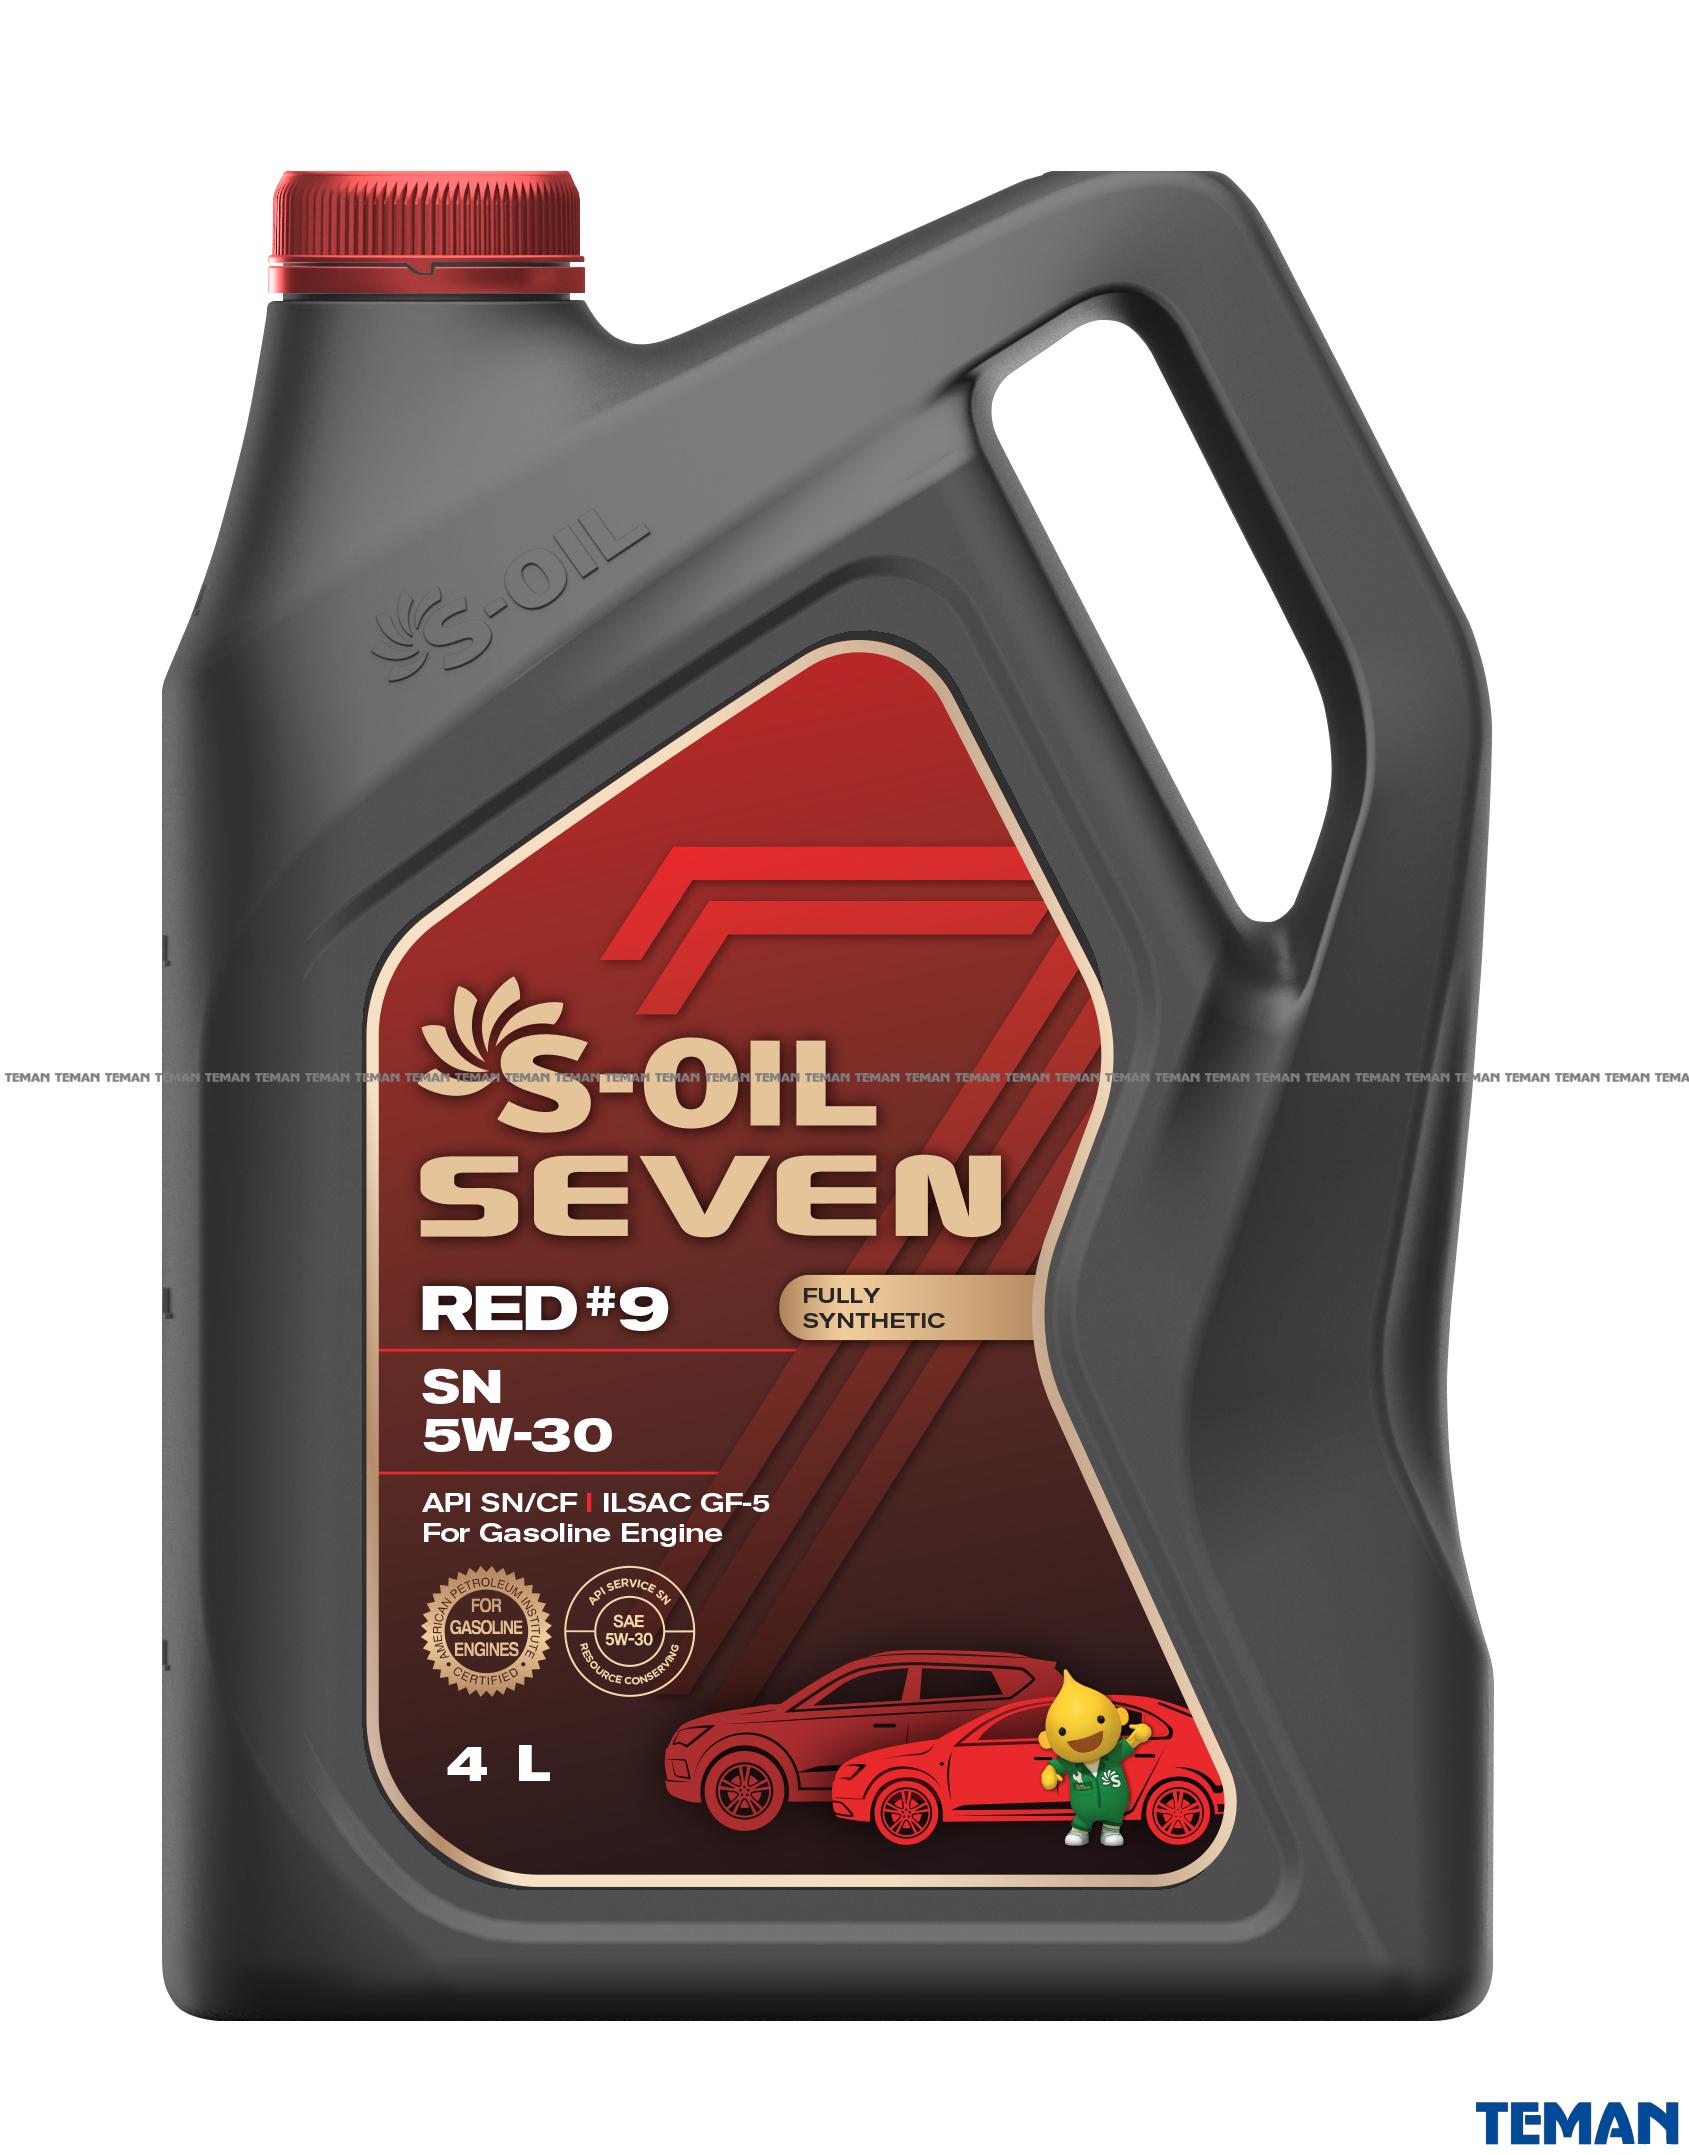  S-OIL 7 RED #9 SN 5W-30 4л Моторное масло 7 RED #9 SN 5W-30 4л купить в официальном магазине S-OIL в Украине - ТЕМАН в Харькове, Ростов-на-Дону Код S-OIL SNR5304